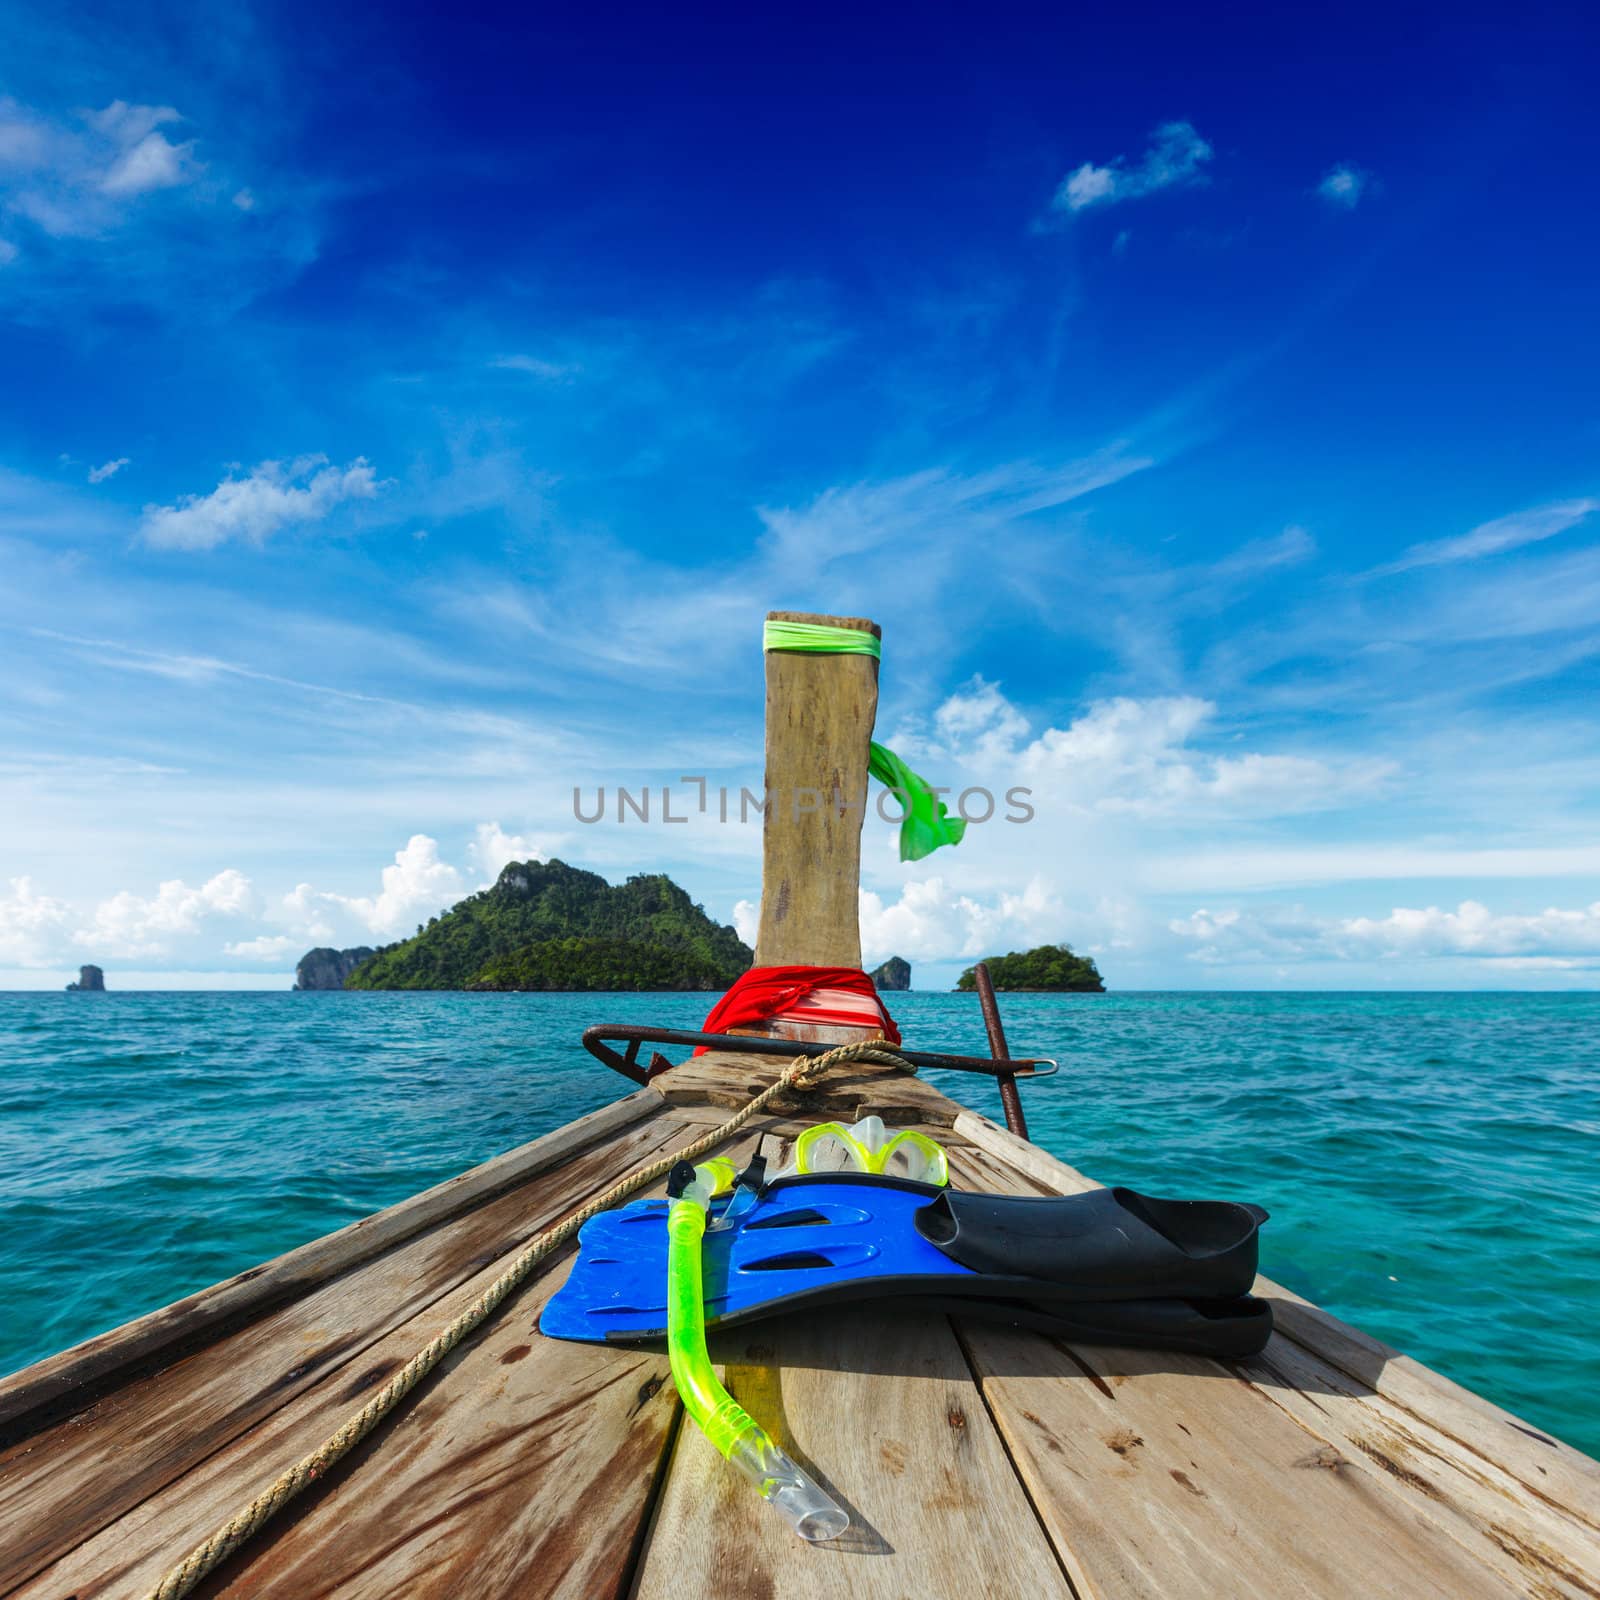 Snorkeling set on boat, sea, island. Thailand